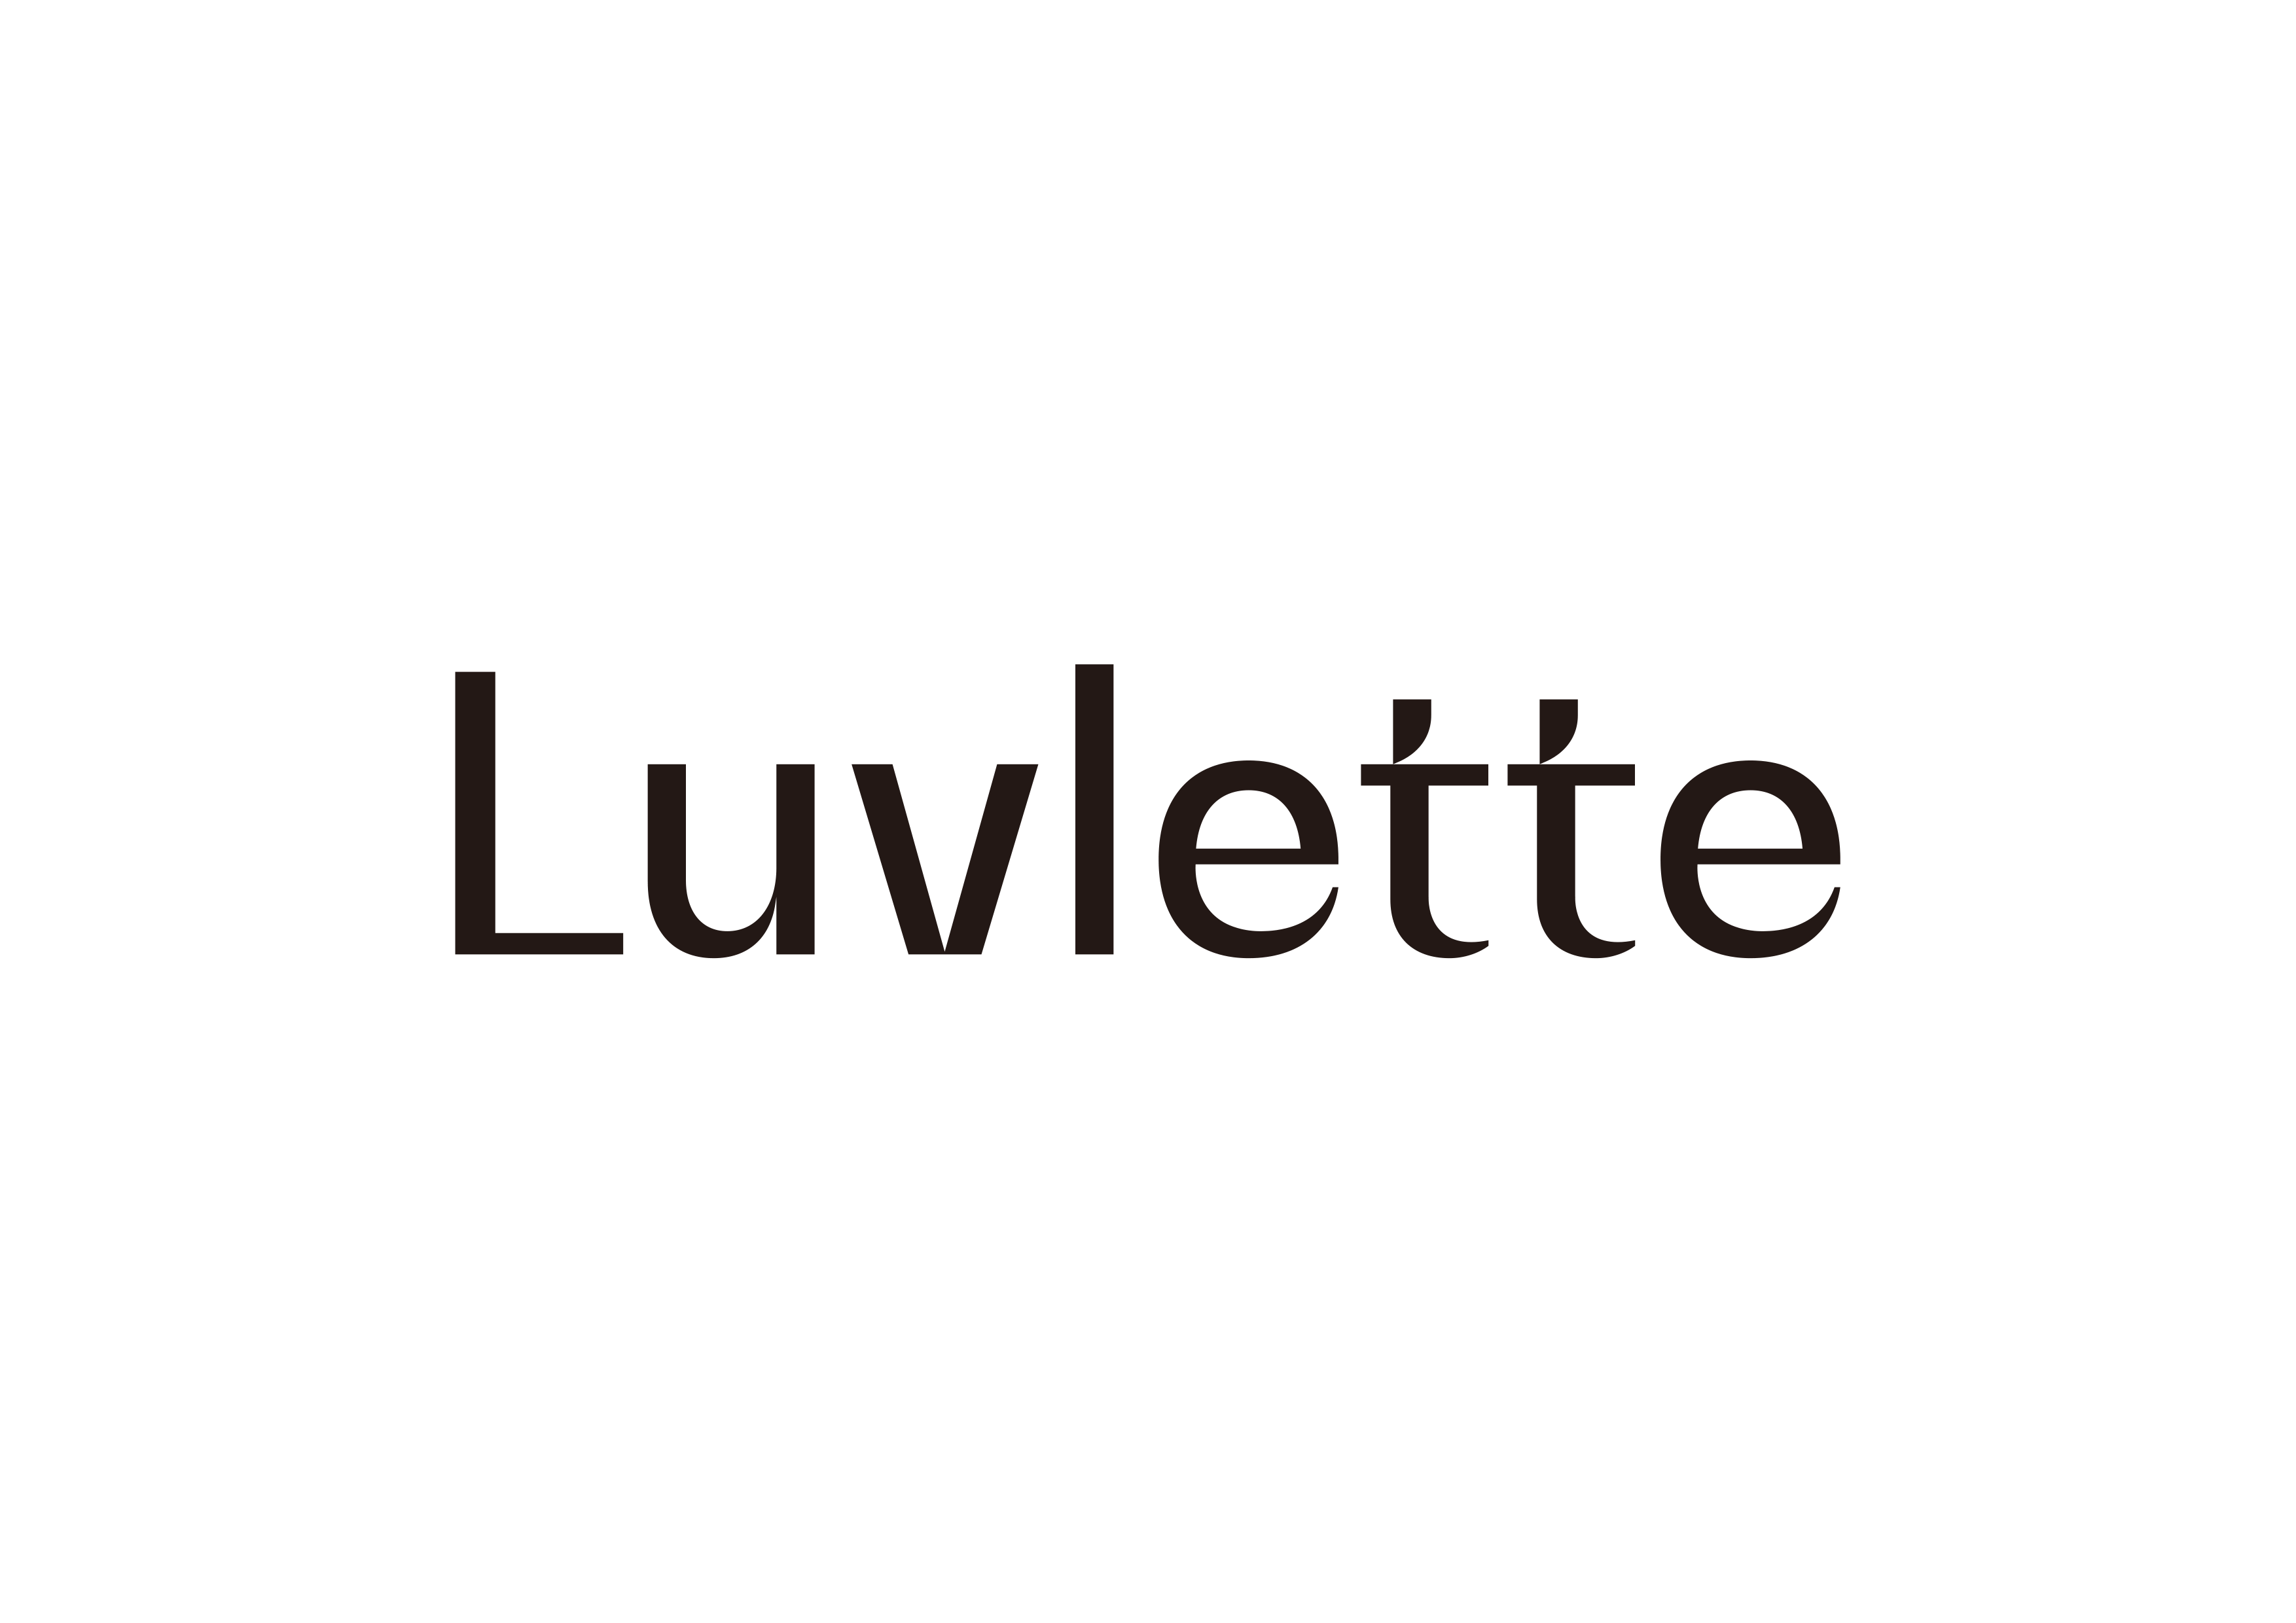 Luvlette Logo